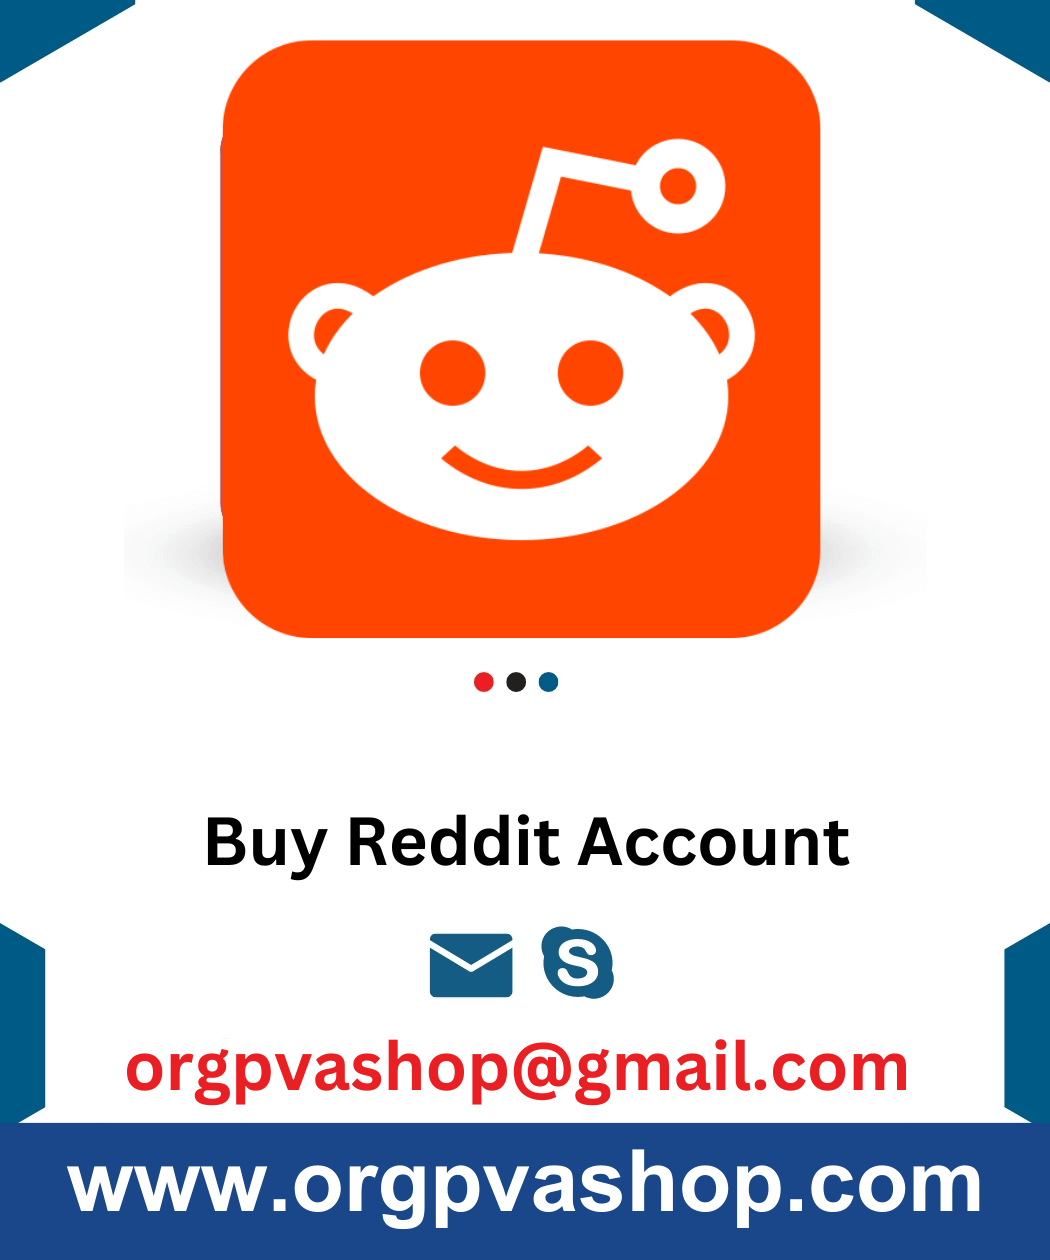 HightQuality Reddit accounts